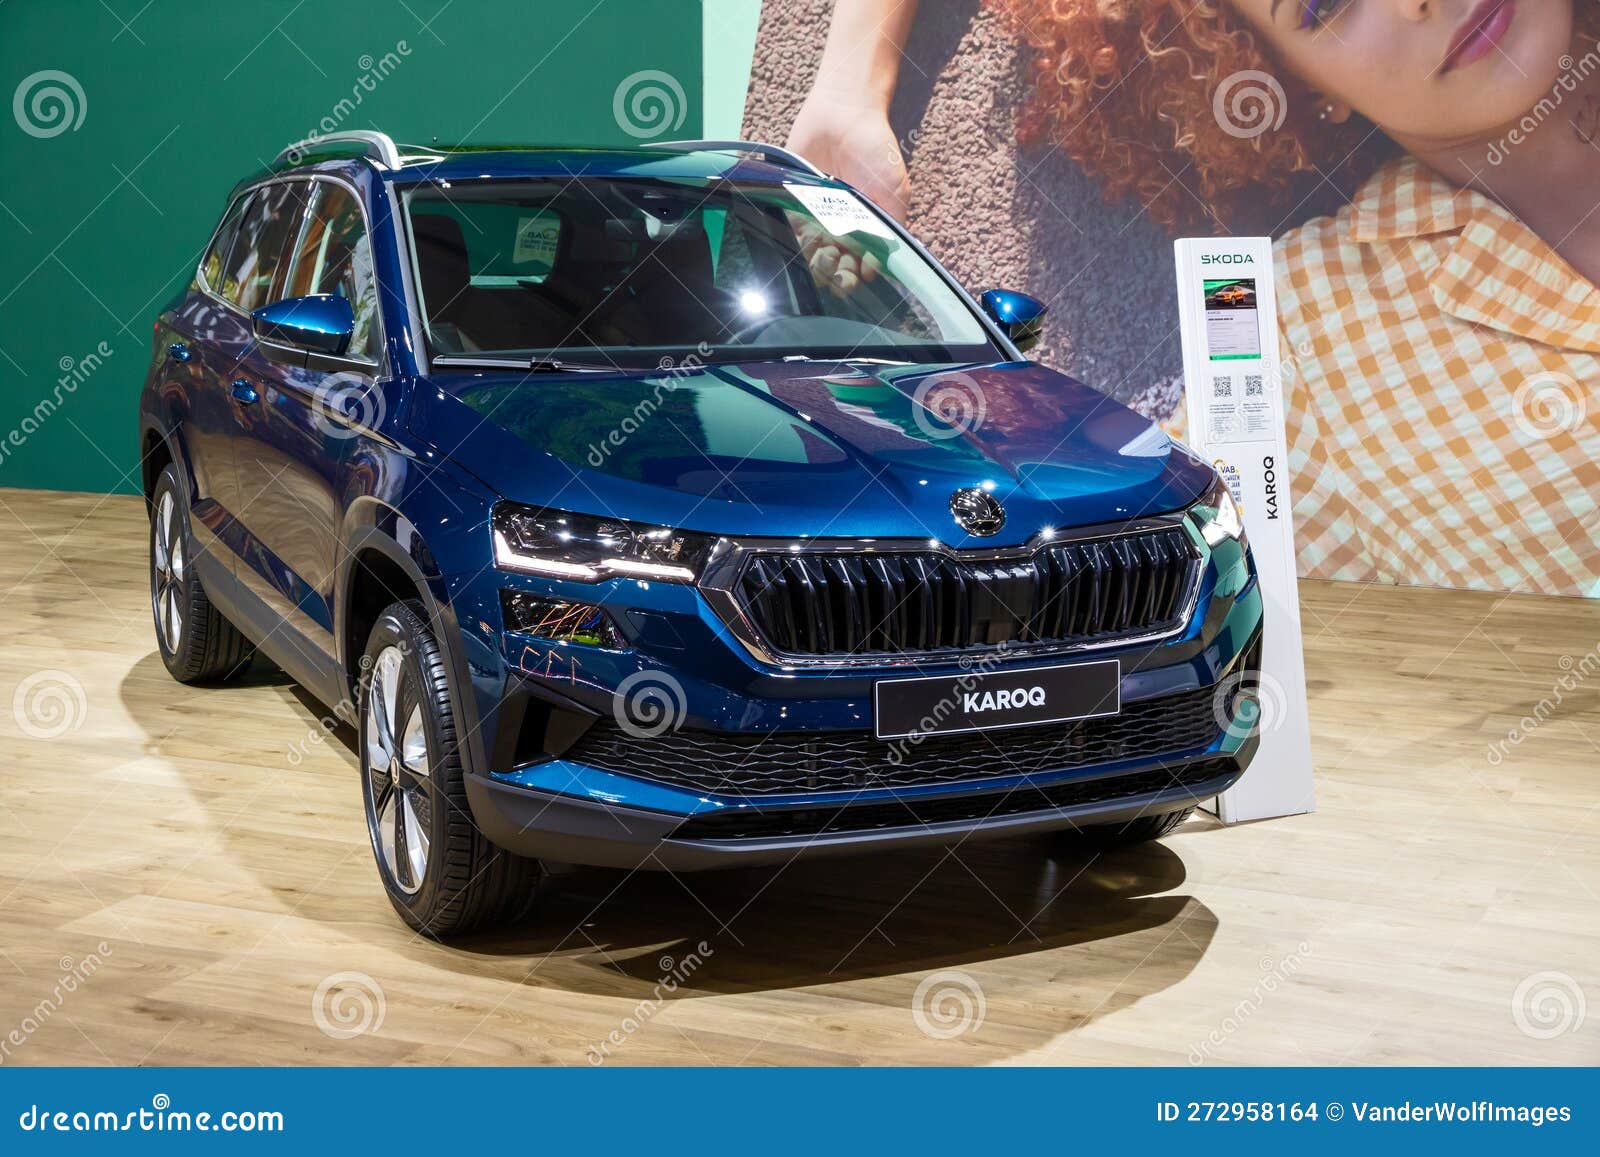 New Skoda Karoq Subcompact SUV Car Showcased at the Brussels